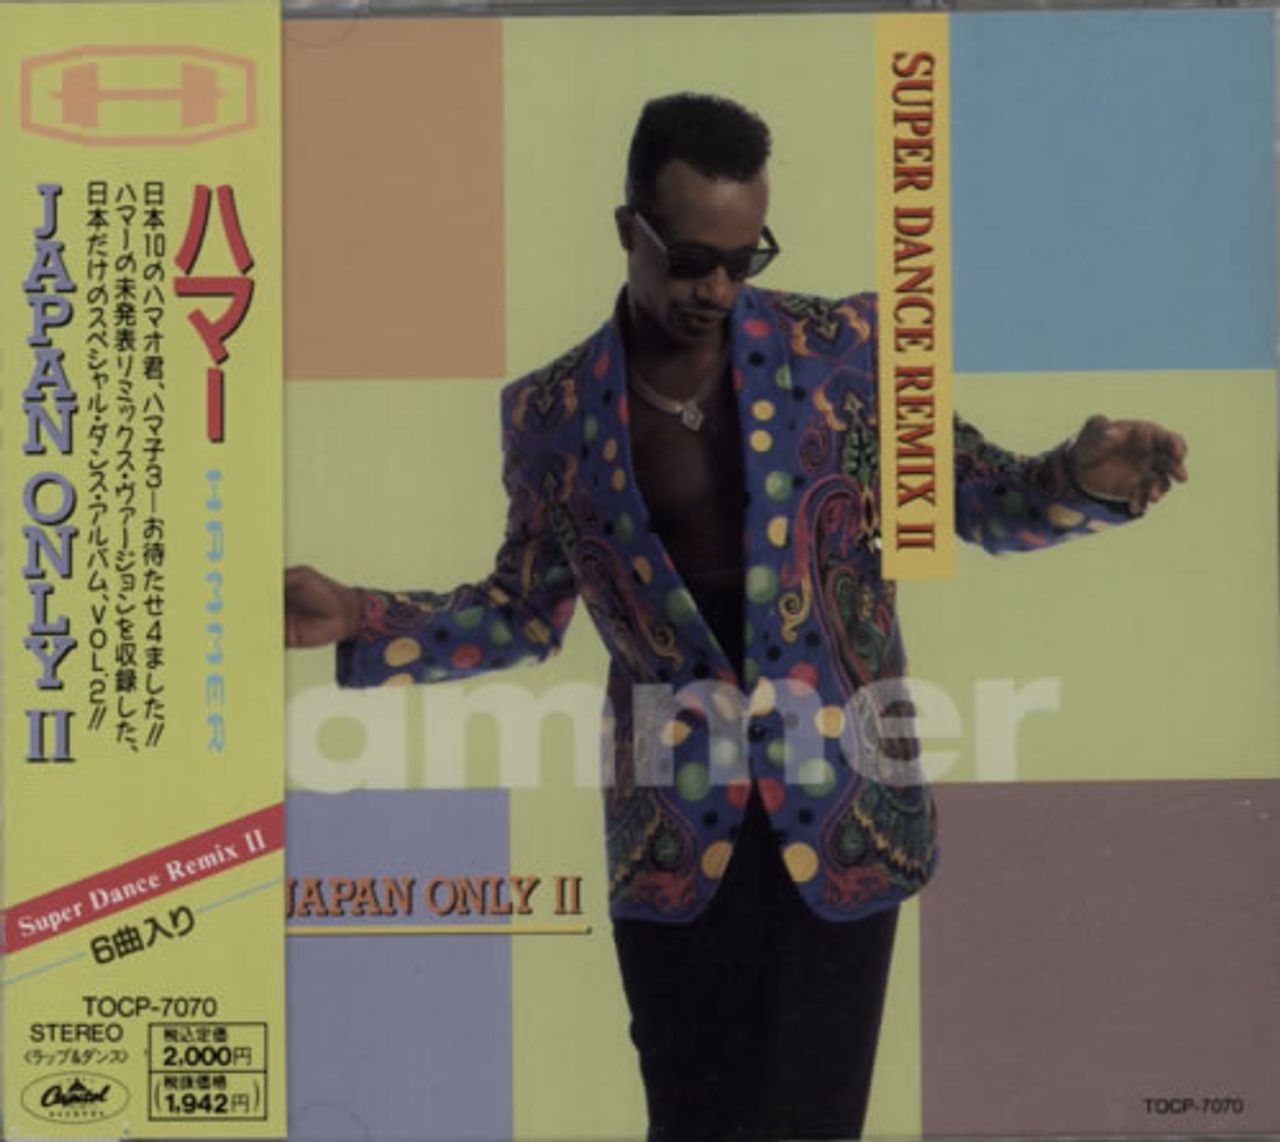 MC Hammer Super Dance Remix II Japanese Promo CD single